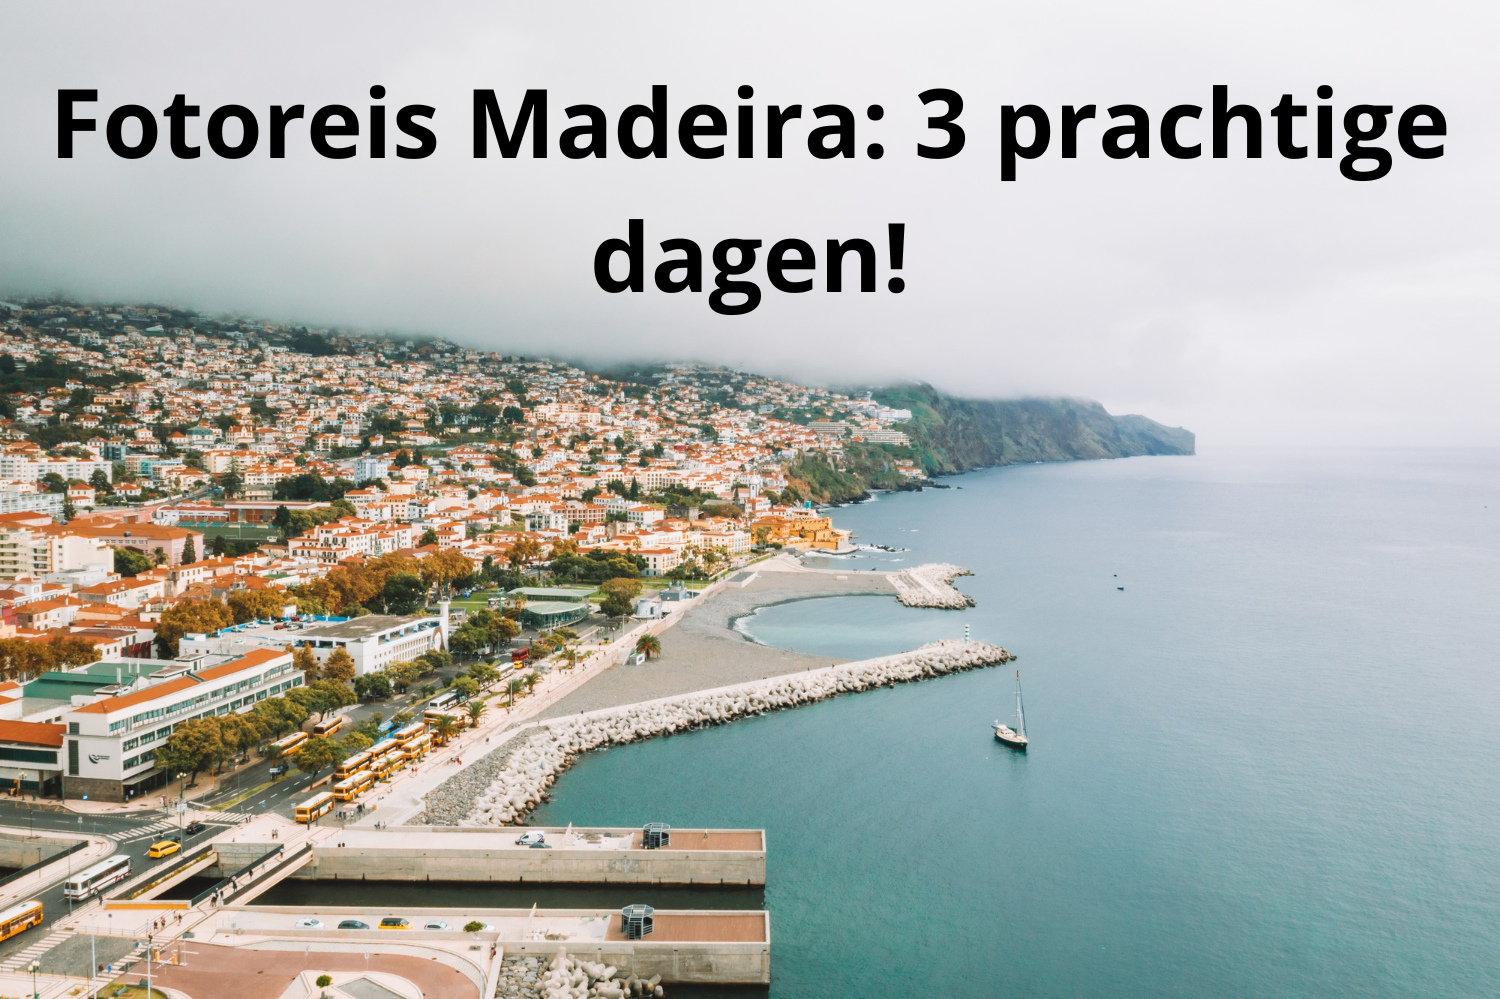 Madeira-Jonker Photography